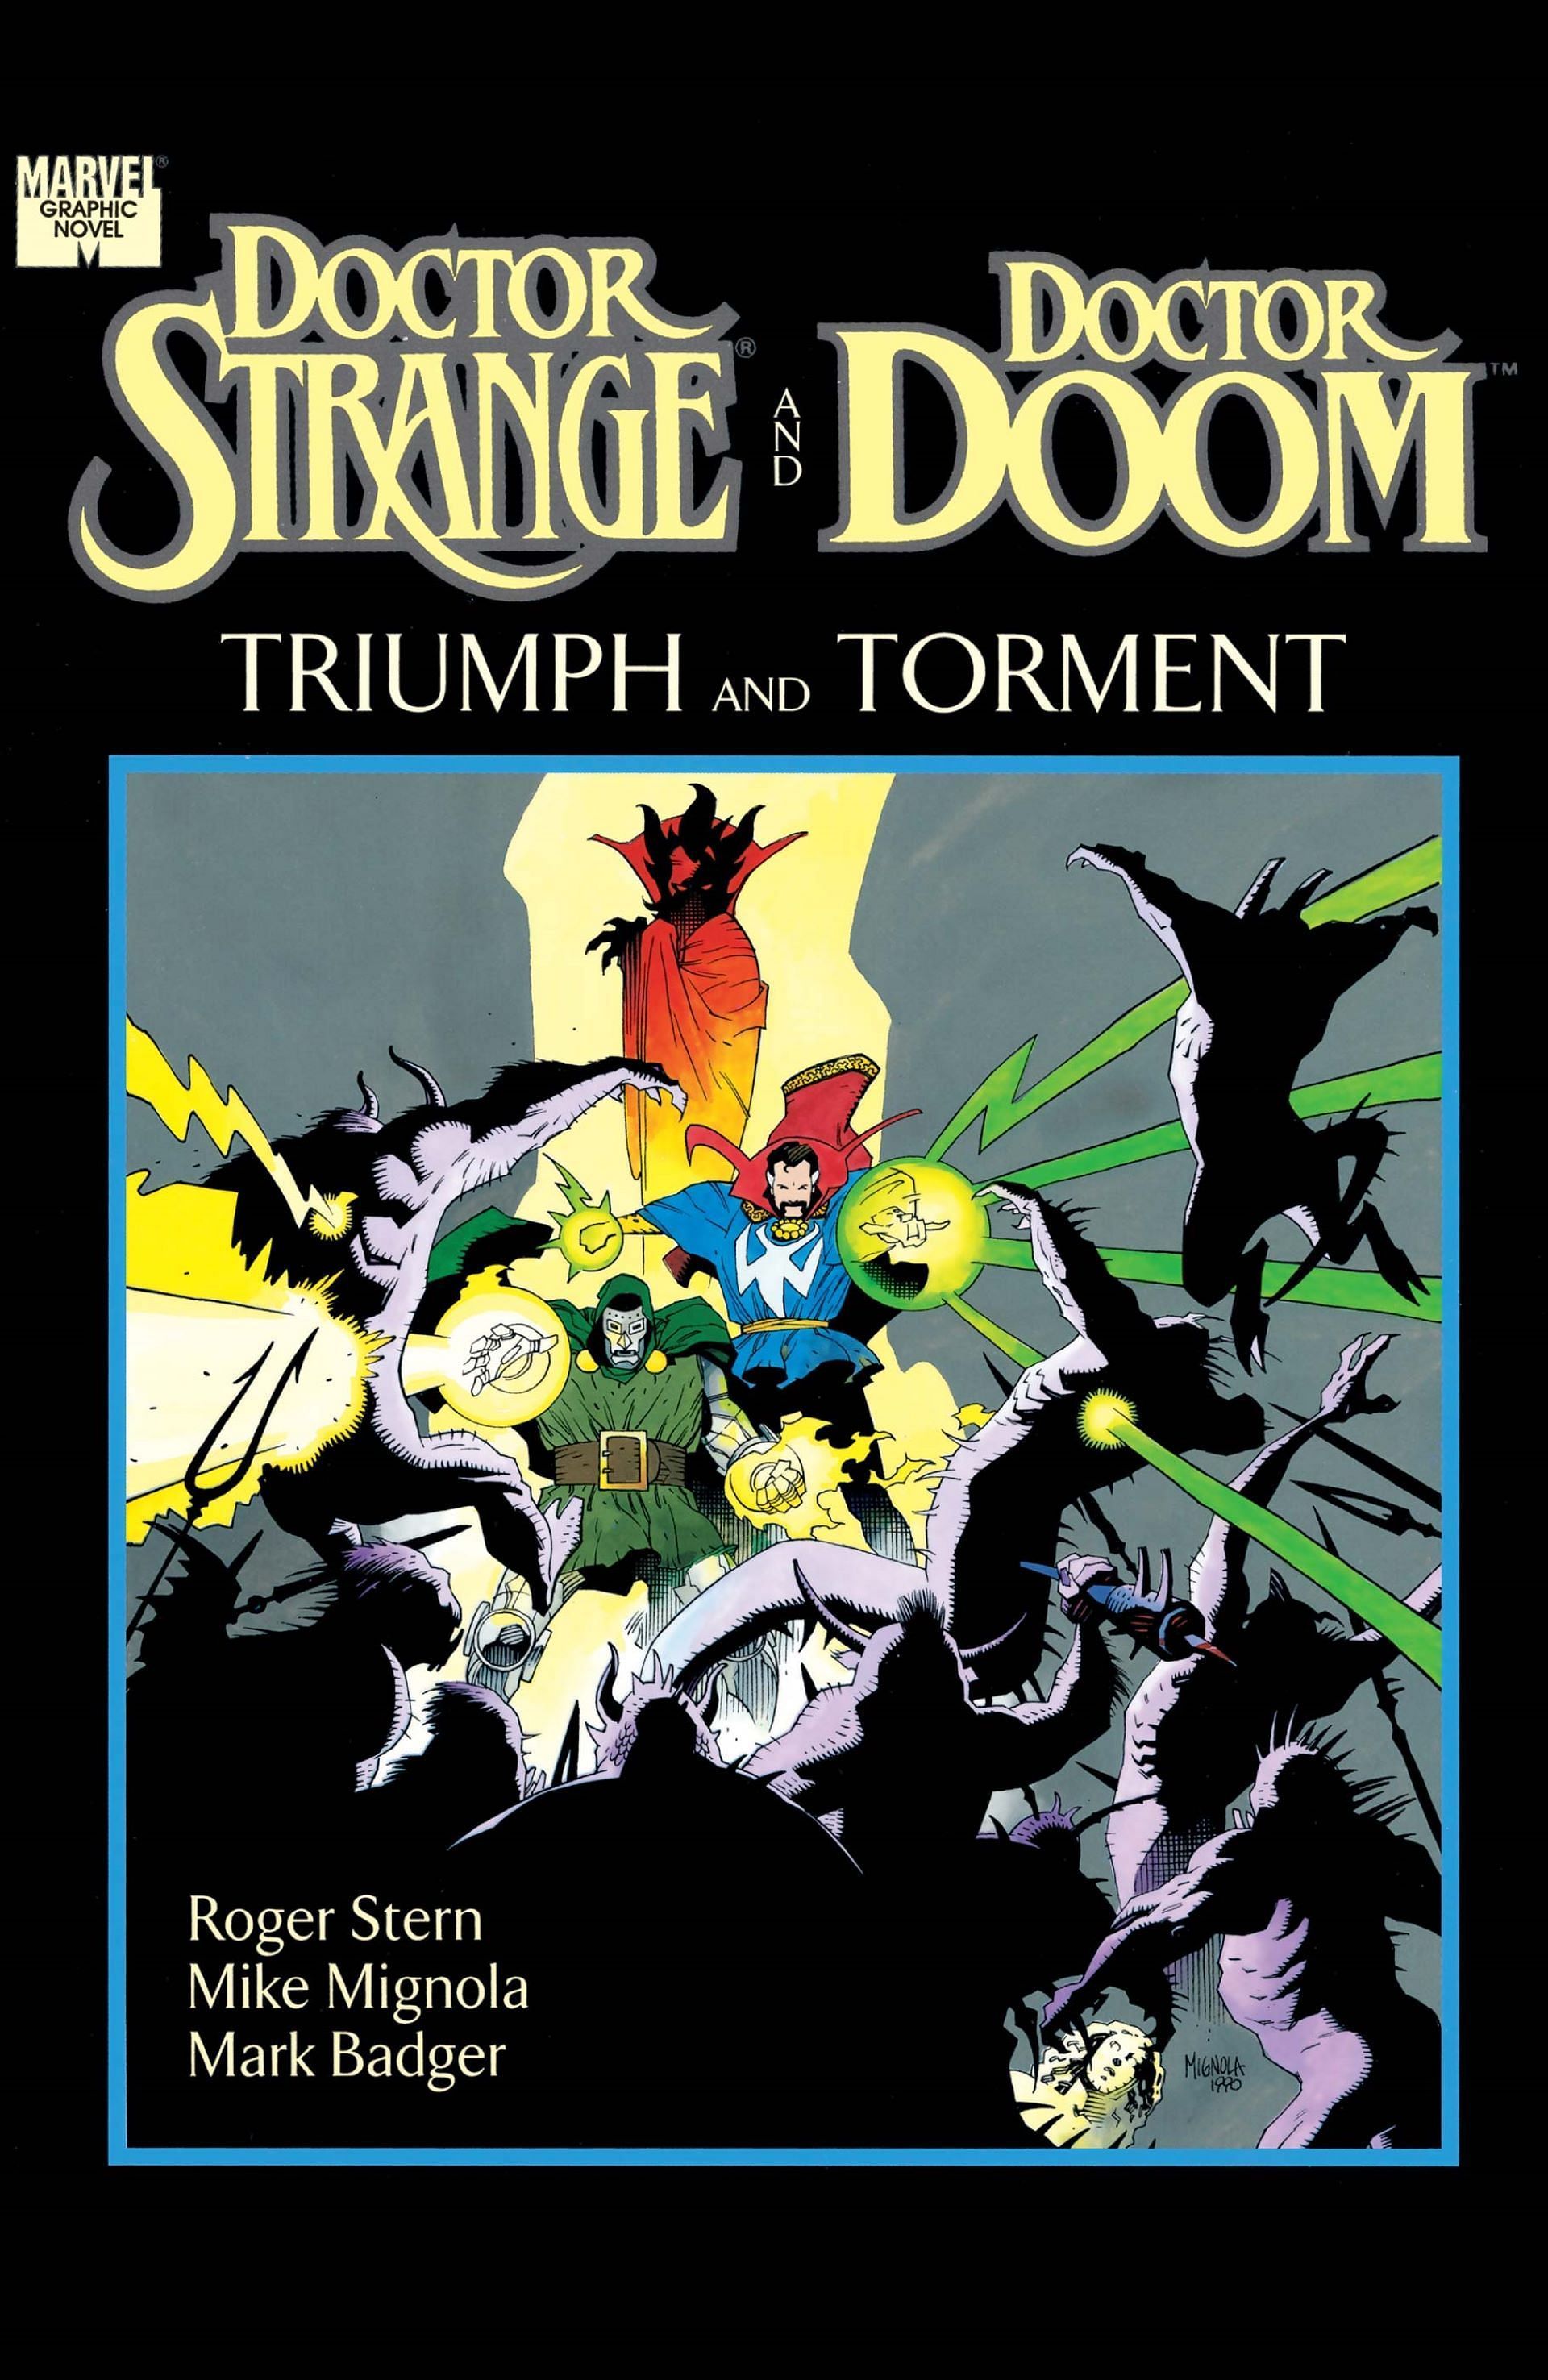 Doctor Strange and Doom has to fight a demon (Image via Marvel)